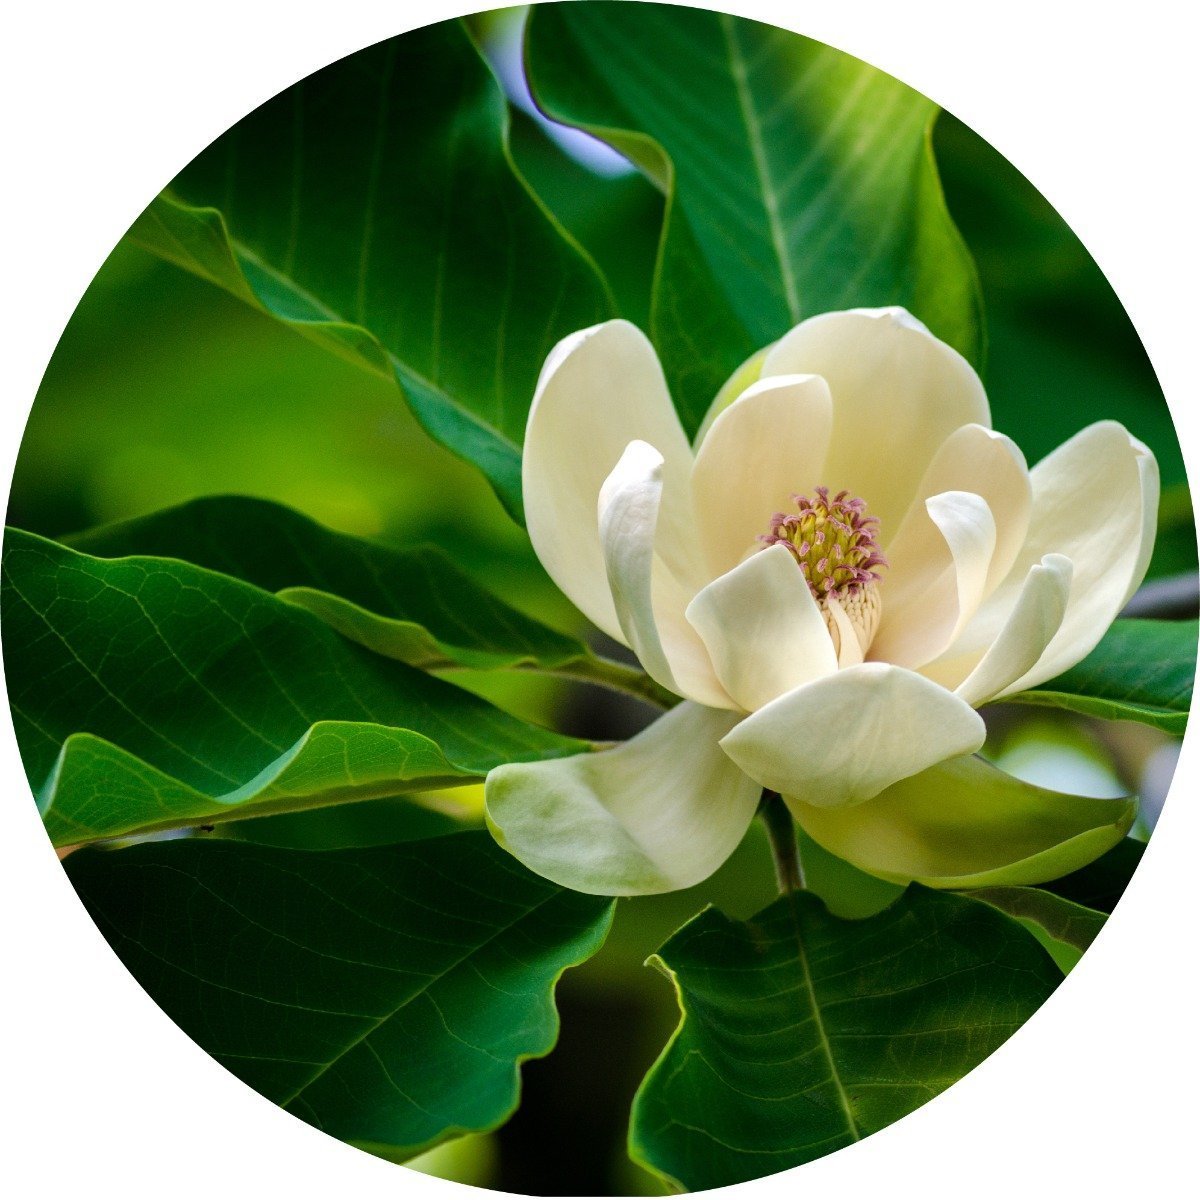 Discover Magnolia Essential Oil Benefits